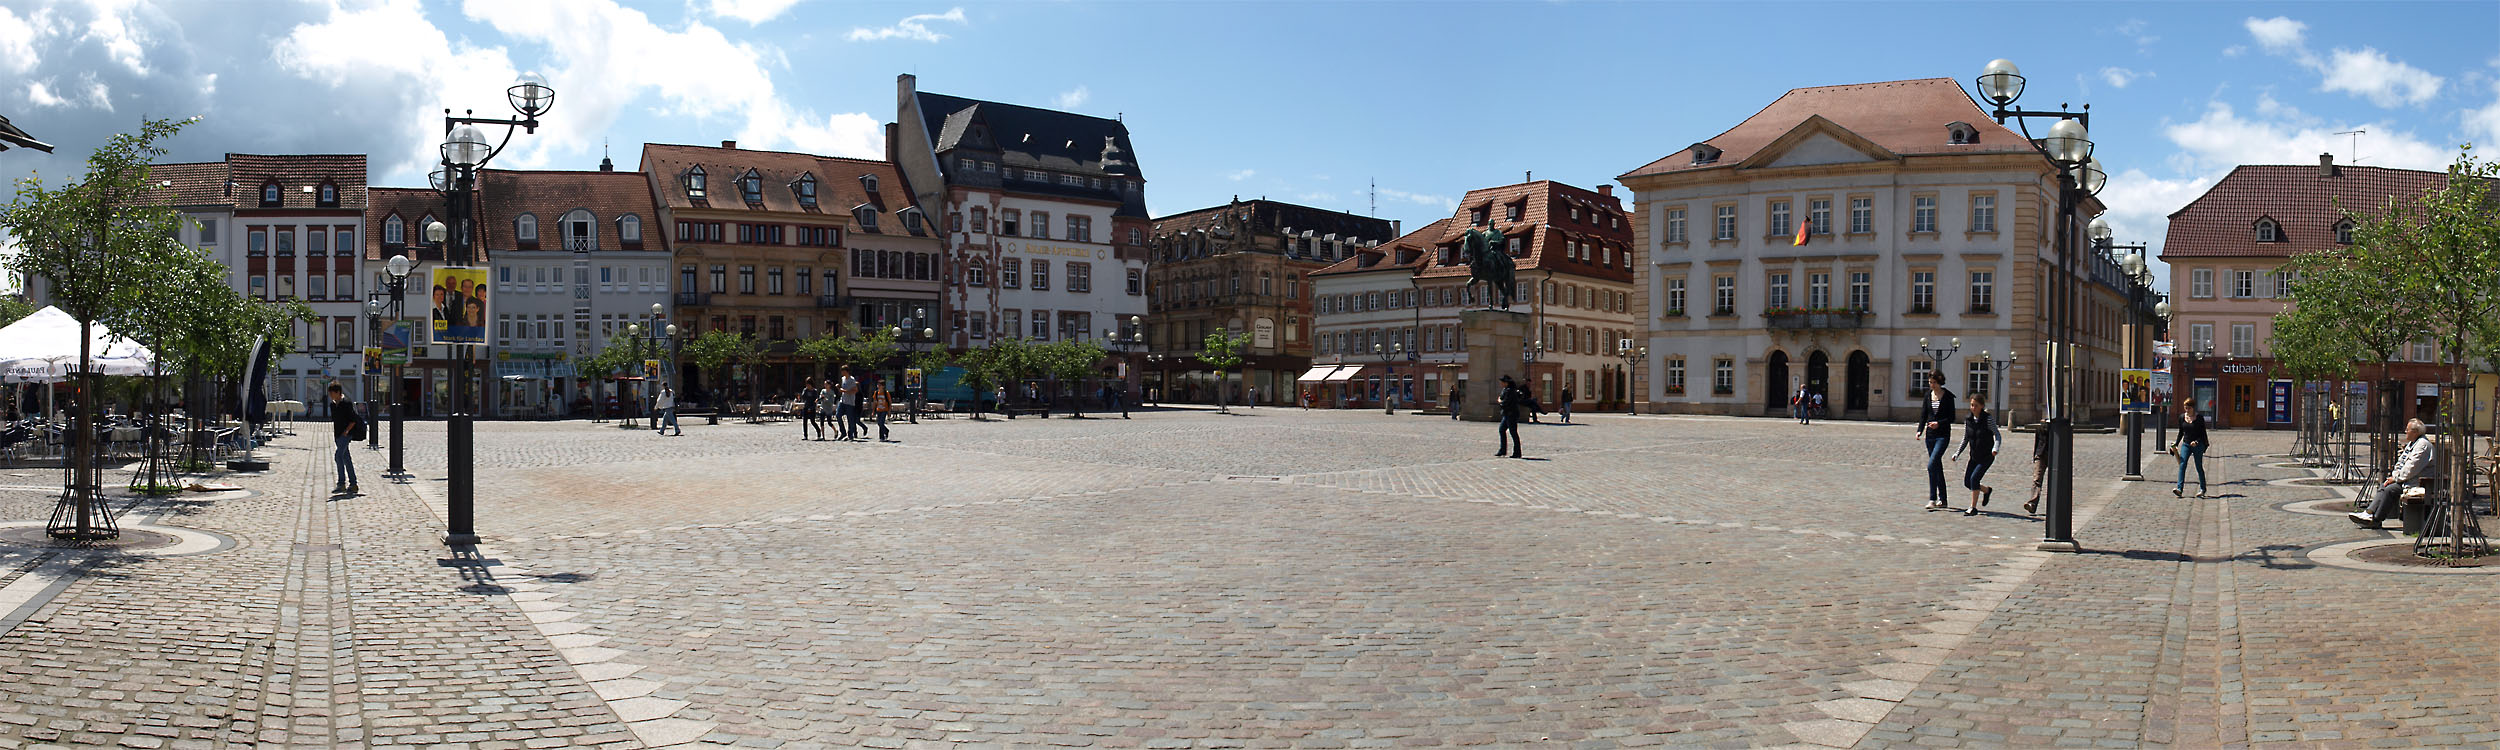 Datei:Landau-Rathausplatz-03.jpg